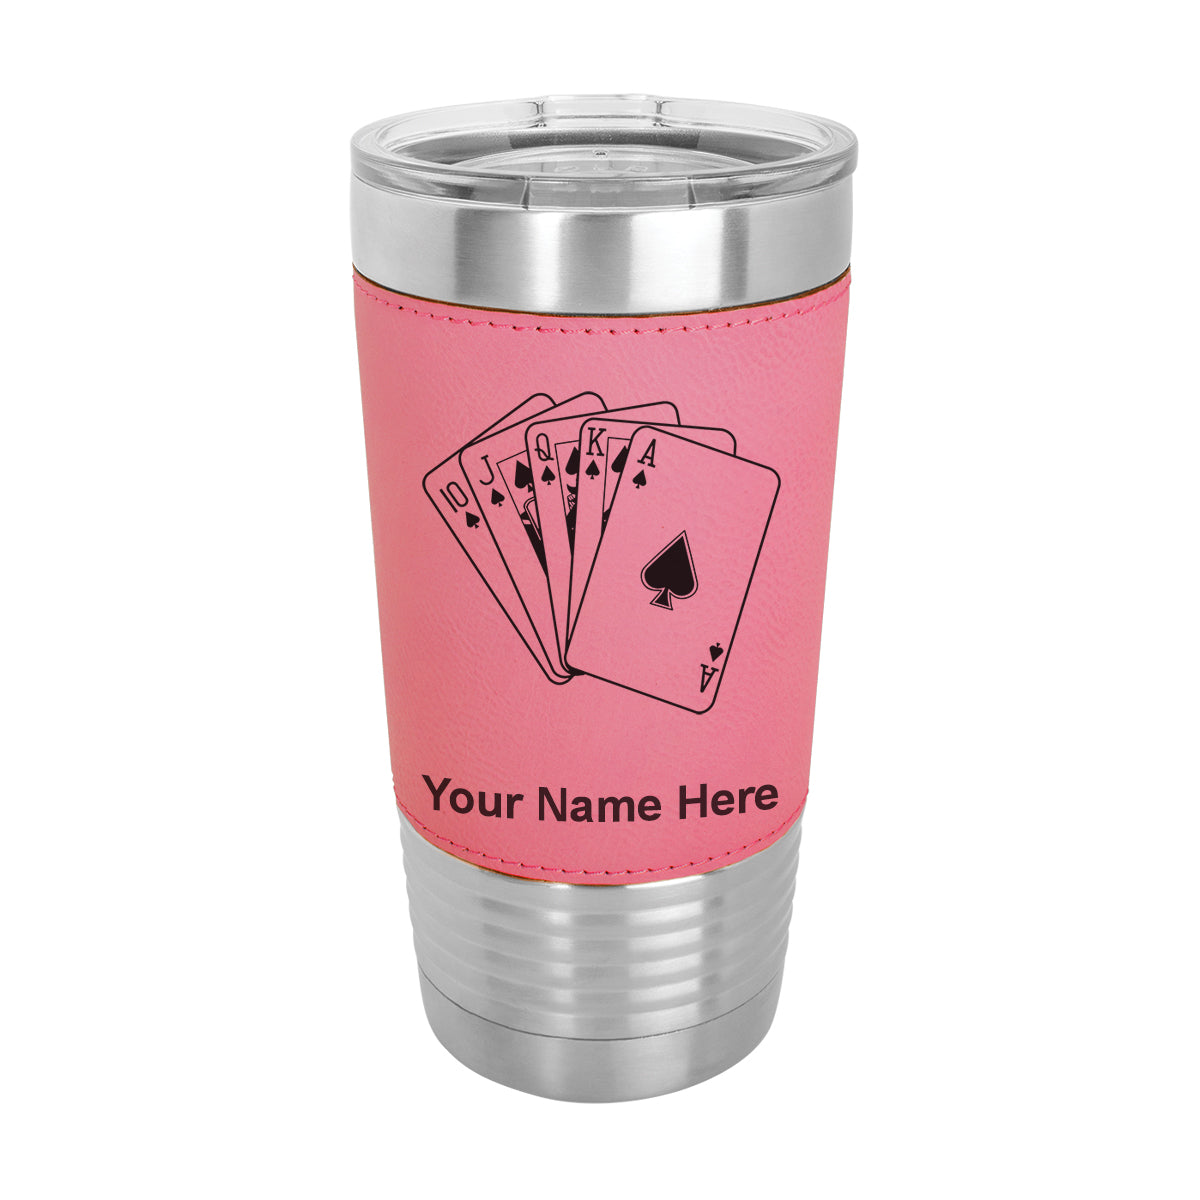 20oz Faux Leather Tumbler Mug, Royal Flush Poker Cards, Personalized Engraving Included - LaserGram Custom Engraved Gifts